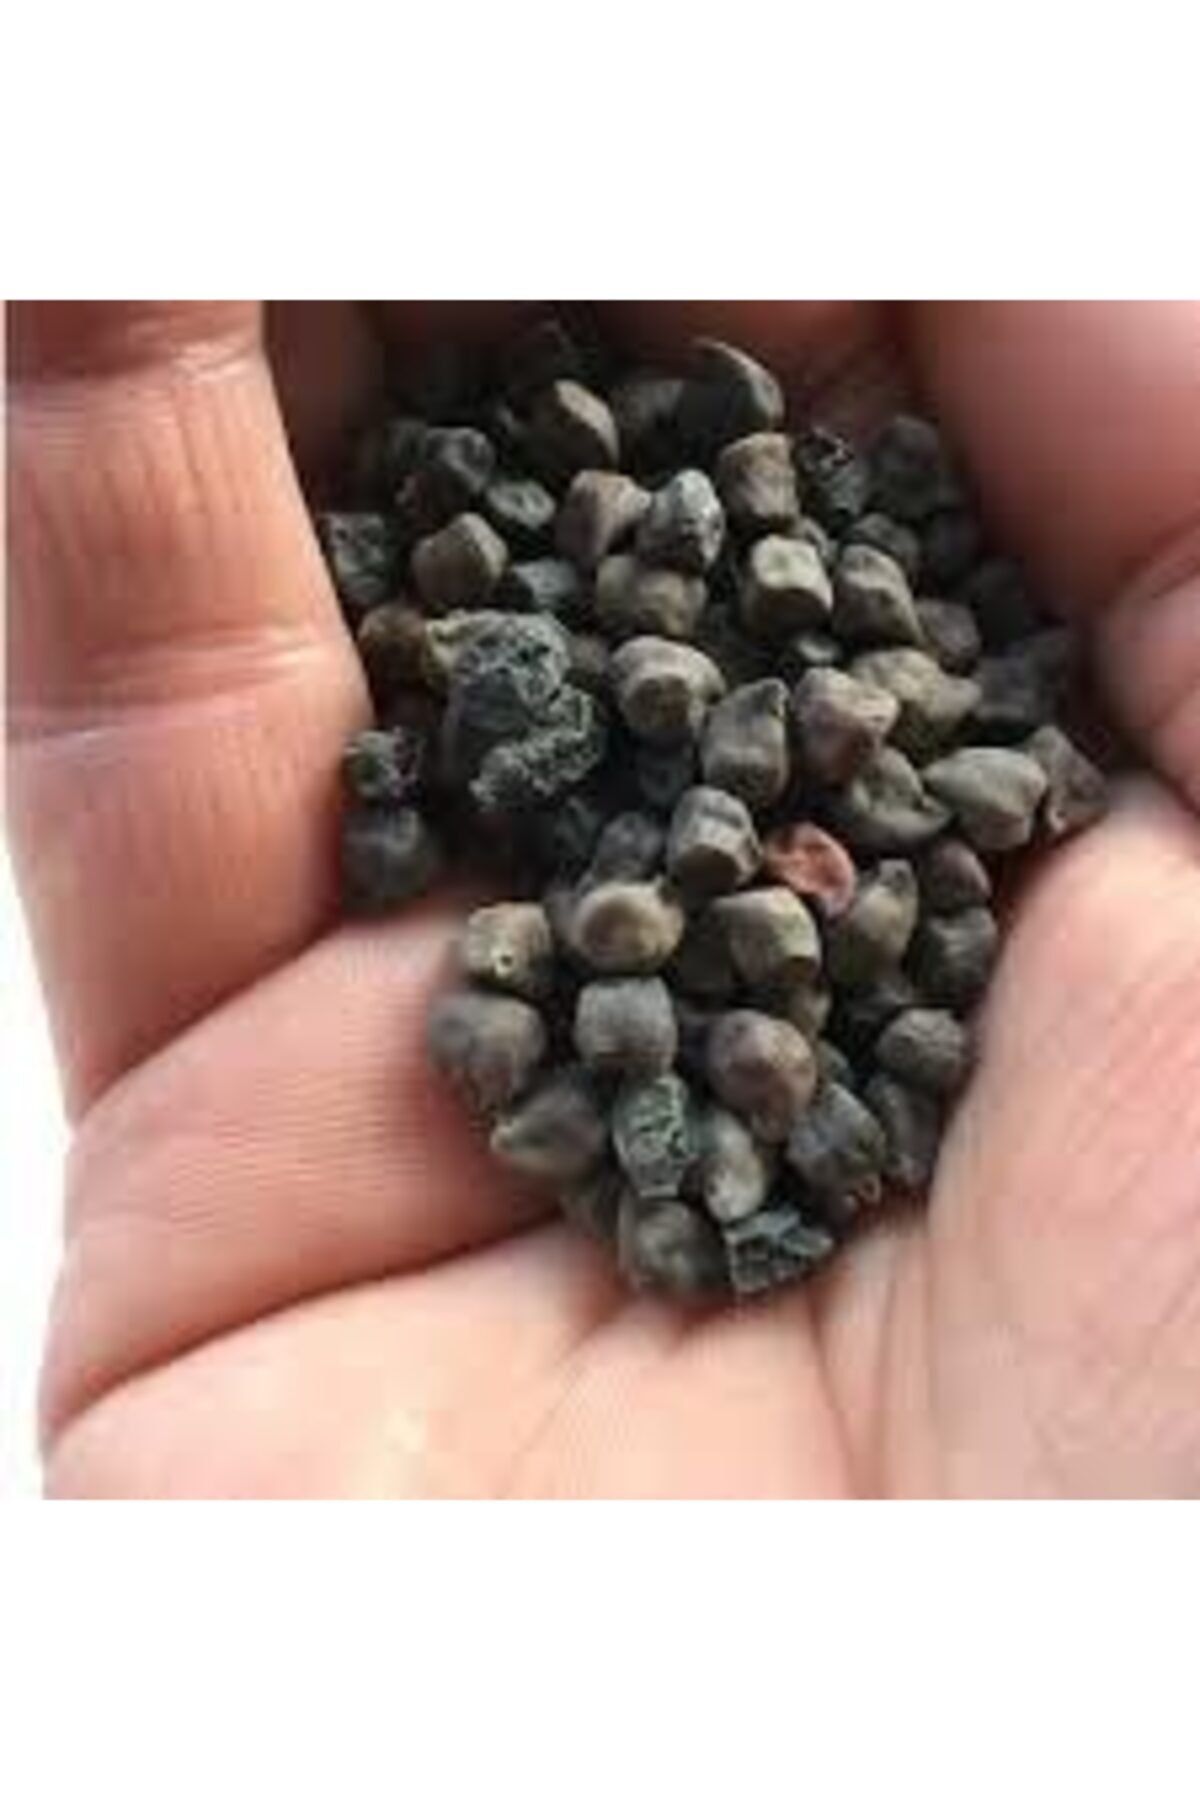 Köy Tohumları 50 Adet Tohum Siyah Nohut Çok Nadir Bulunan Faydaları Saymakla Bitmeyen Nohut Kara Nohut Tohumu